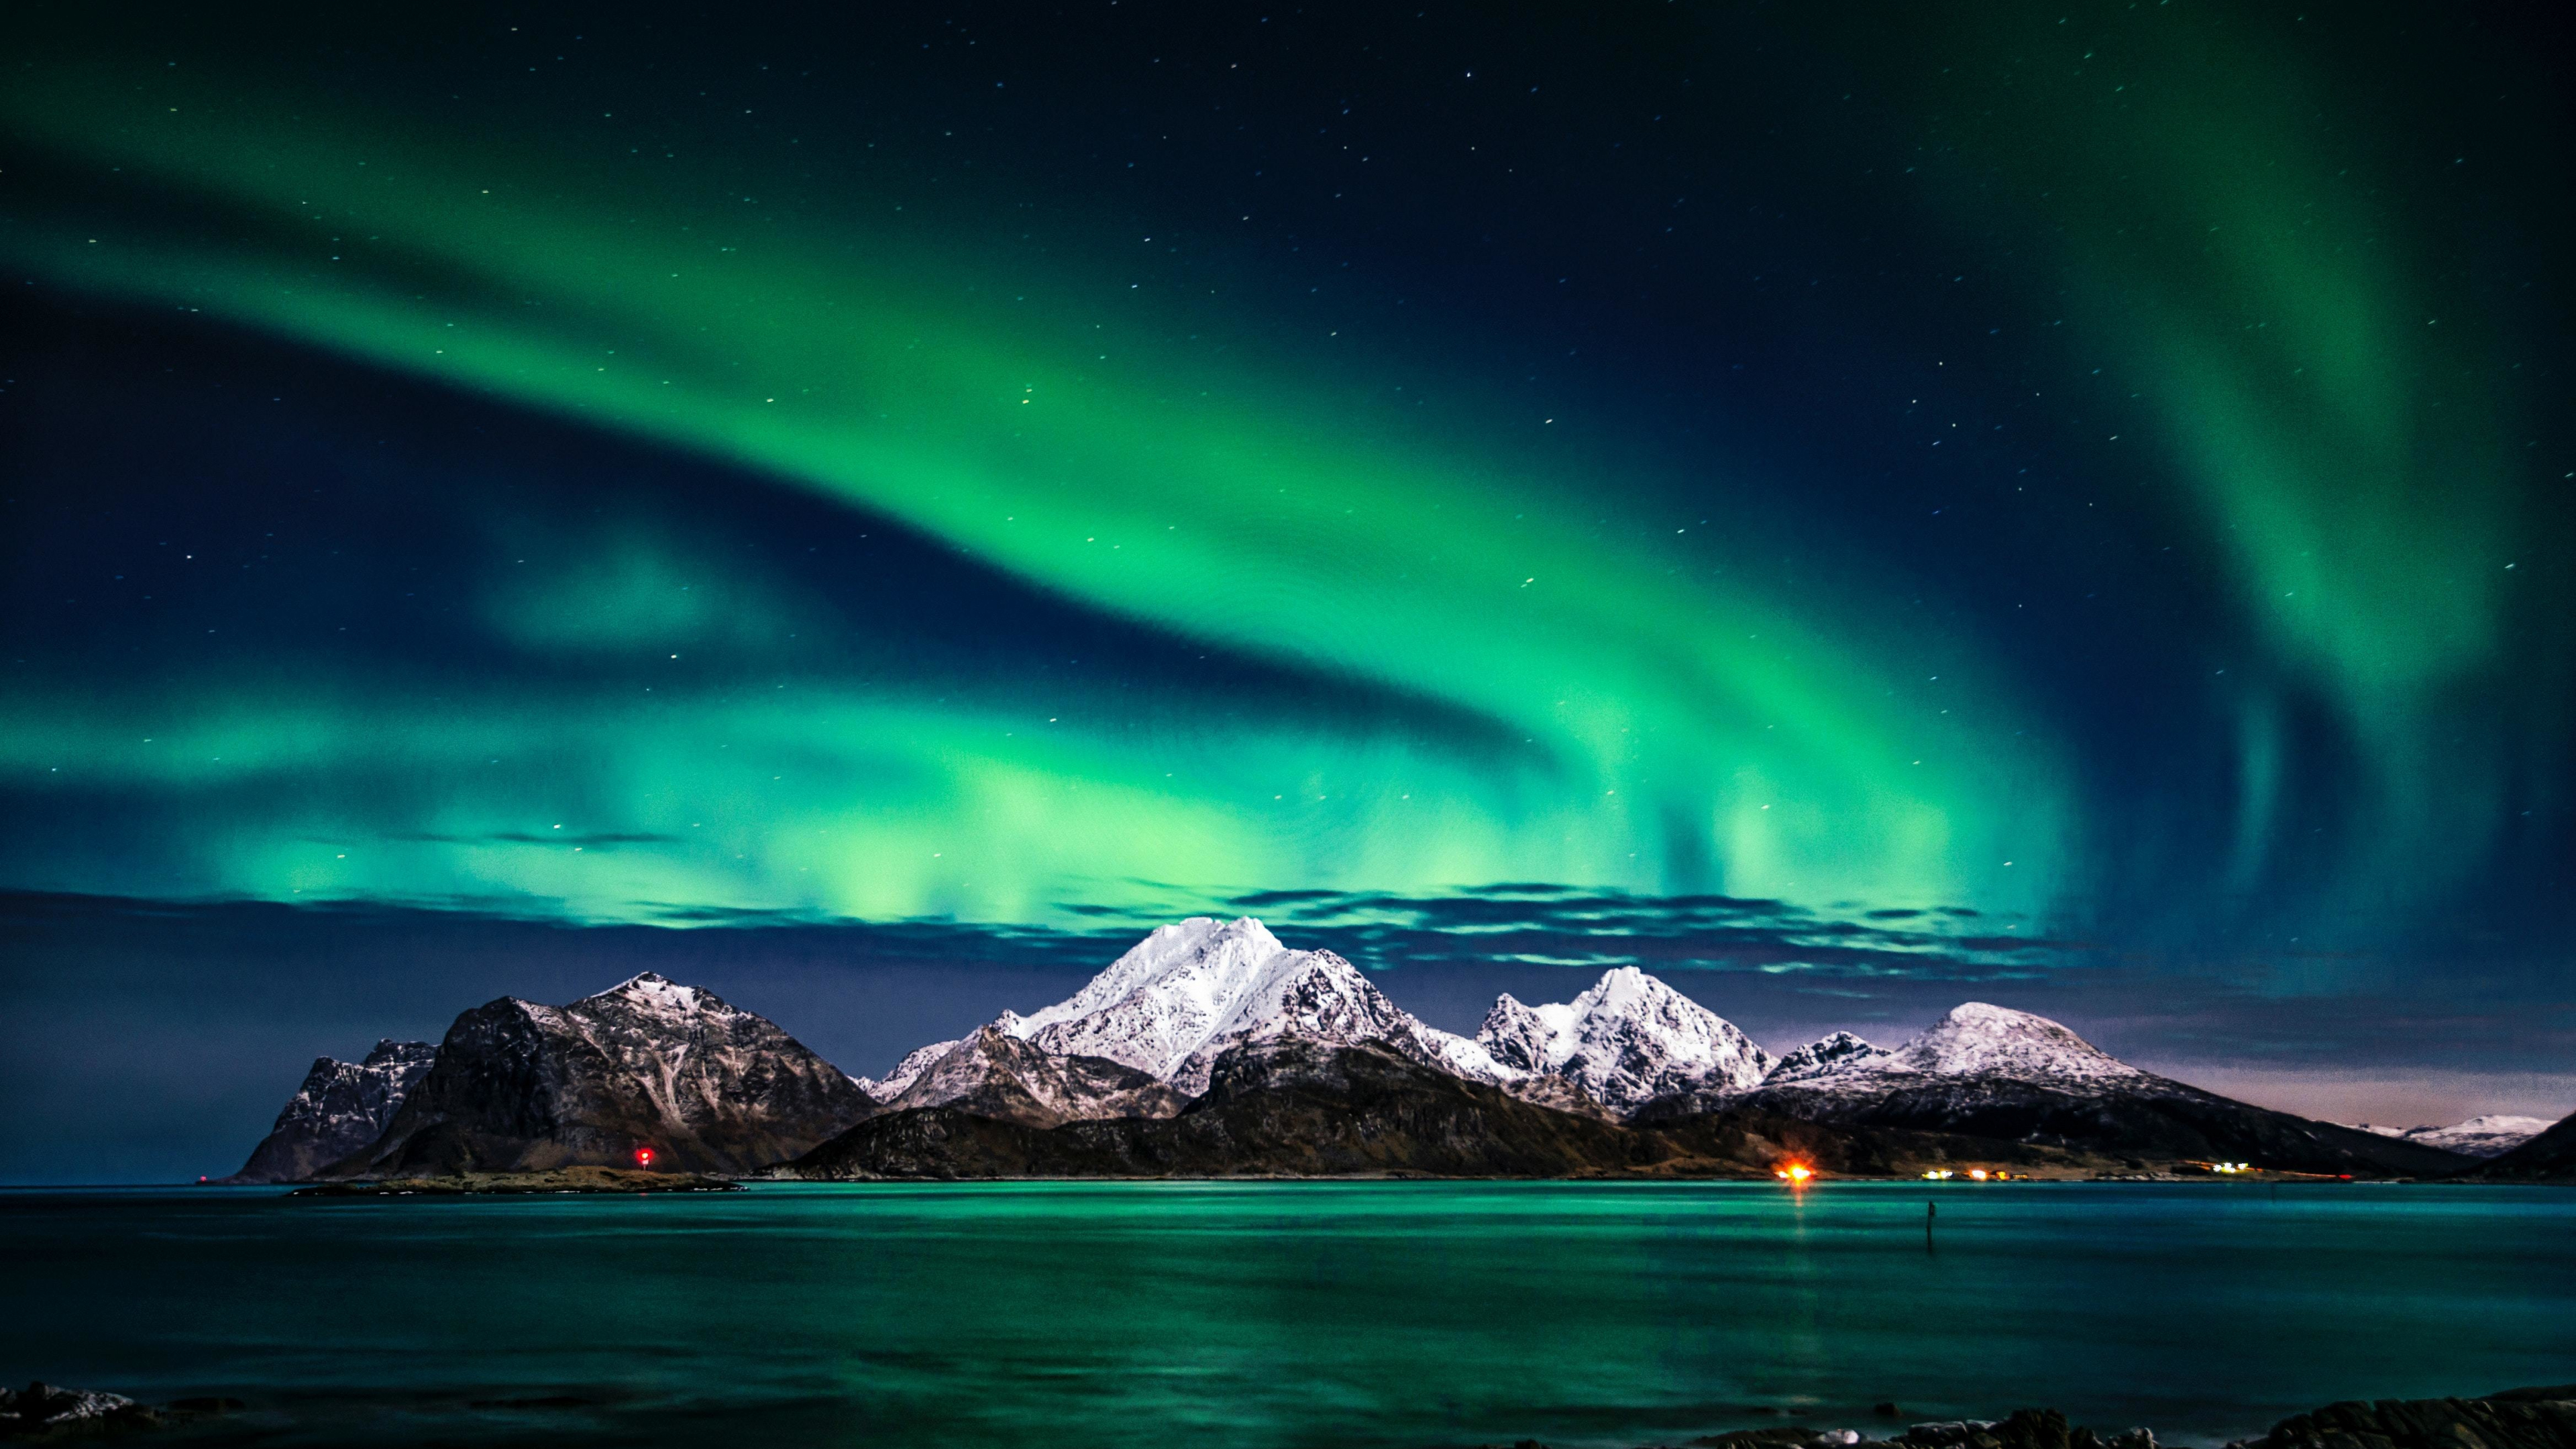 Download 3840x2160 Wallpaper Aurora Borealis Green Lights Sky Night